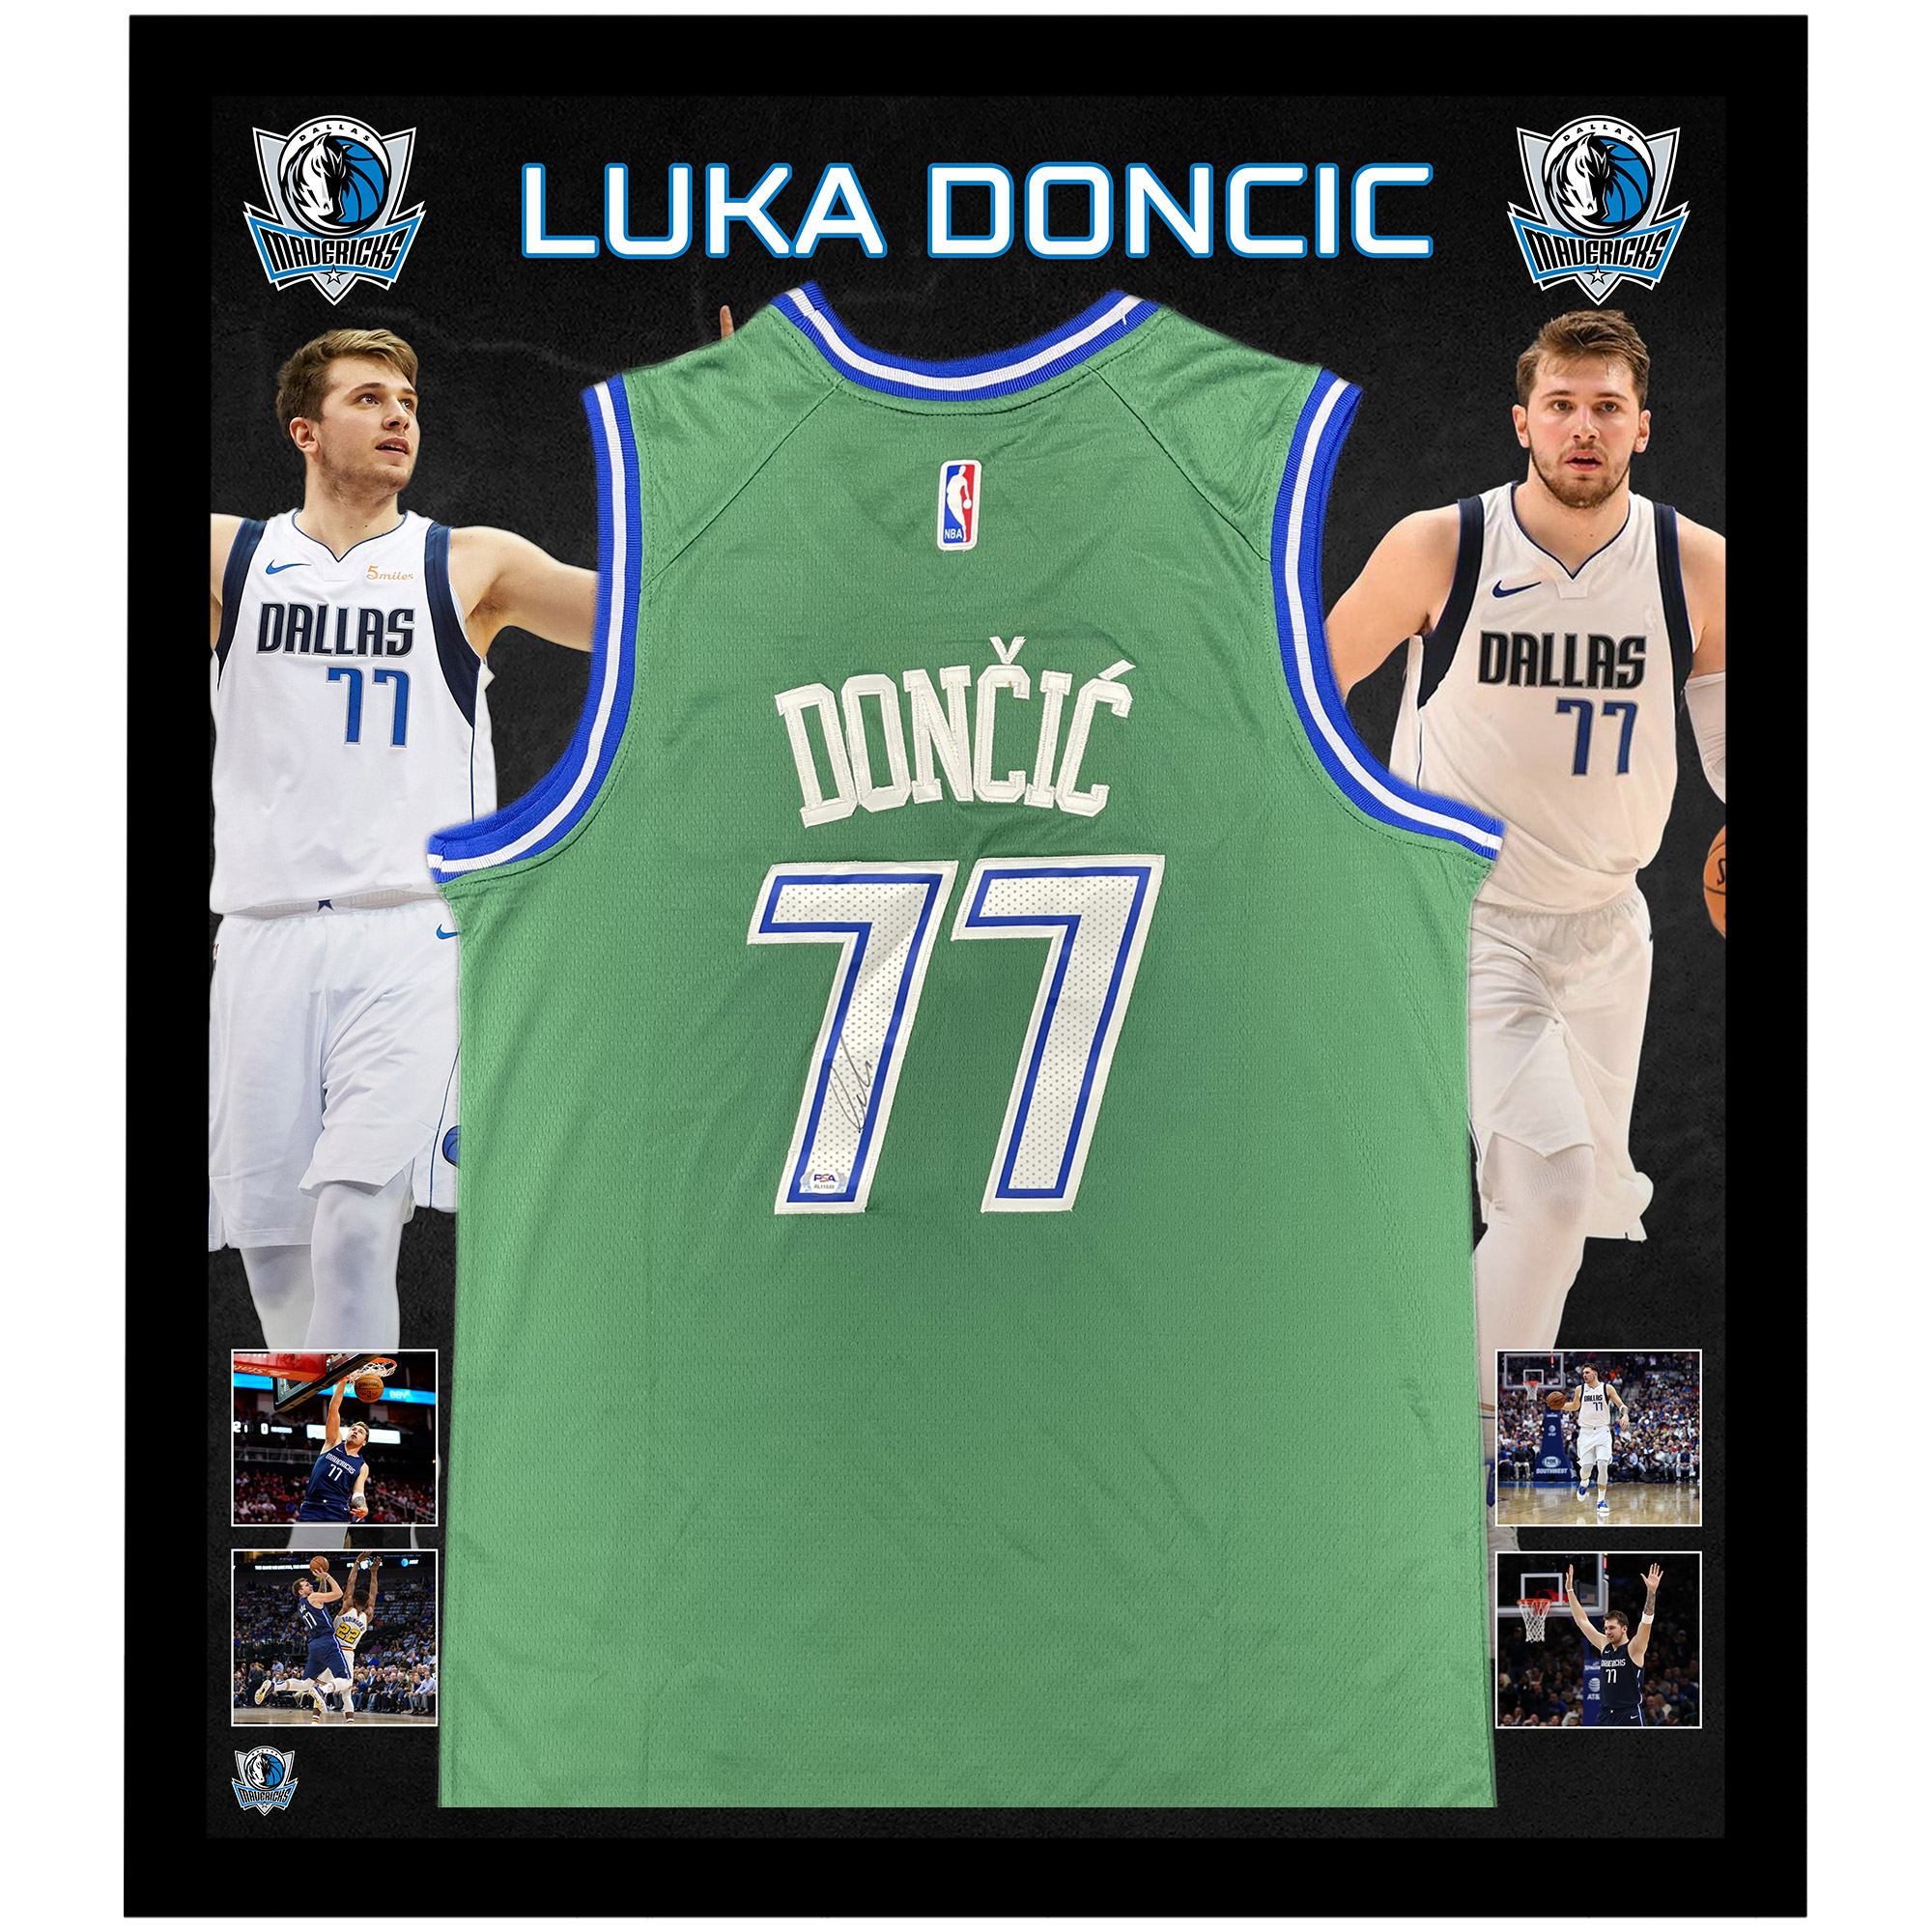 Luka Doncic Signed Jersey (PSA)